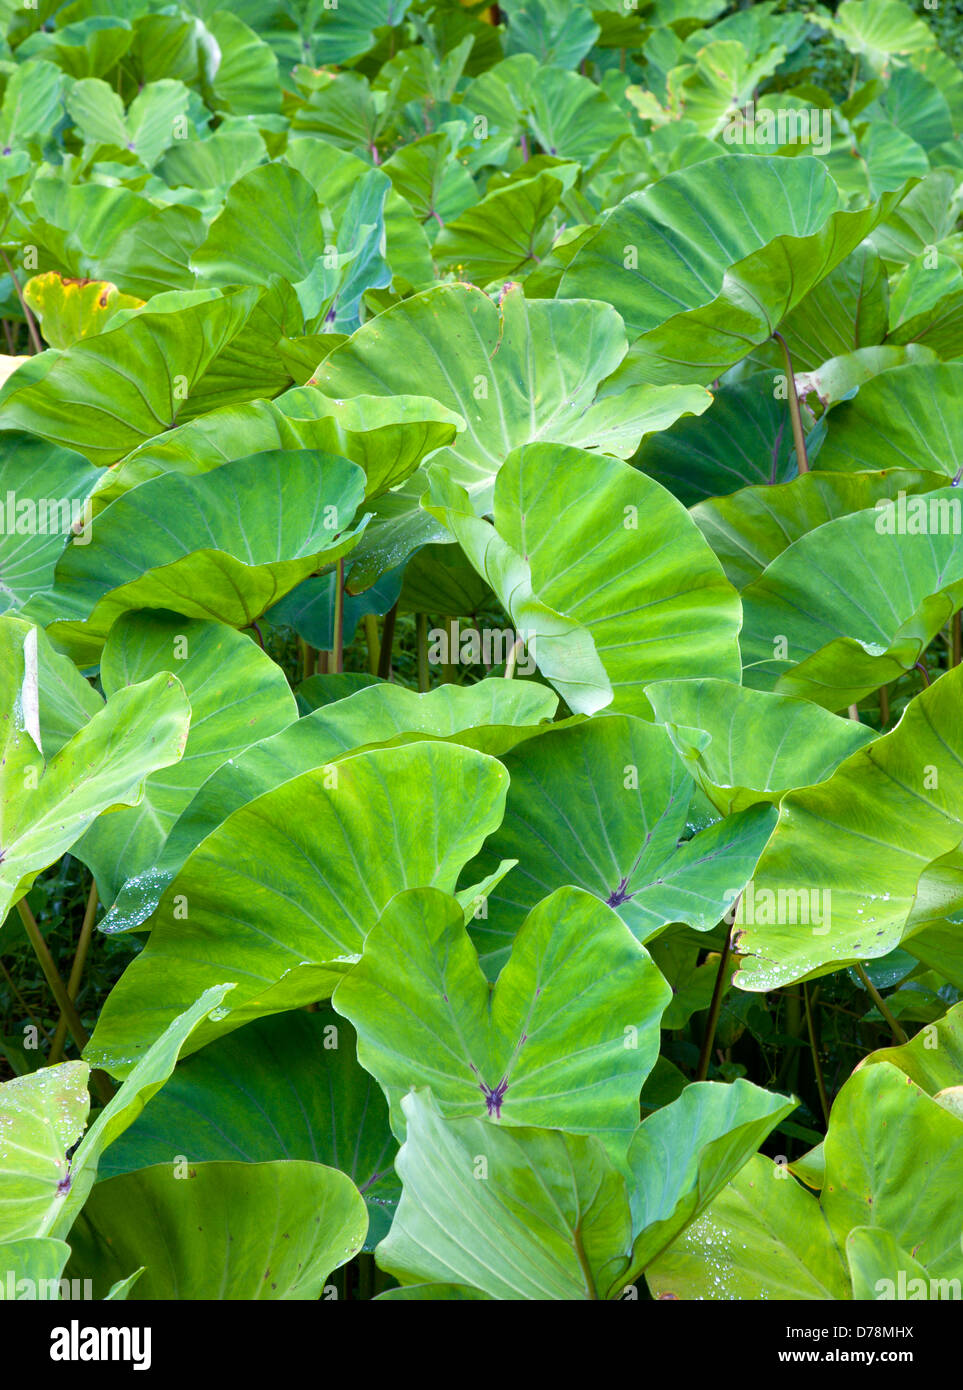 Caribbean, West Indies, Grenada, St John, Detail of lush, green leaves of Yautia or Callaloo crop, Xanthosoma sagittifolium. Stock Photo